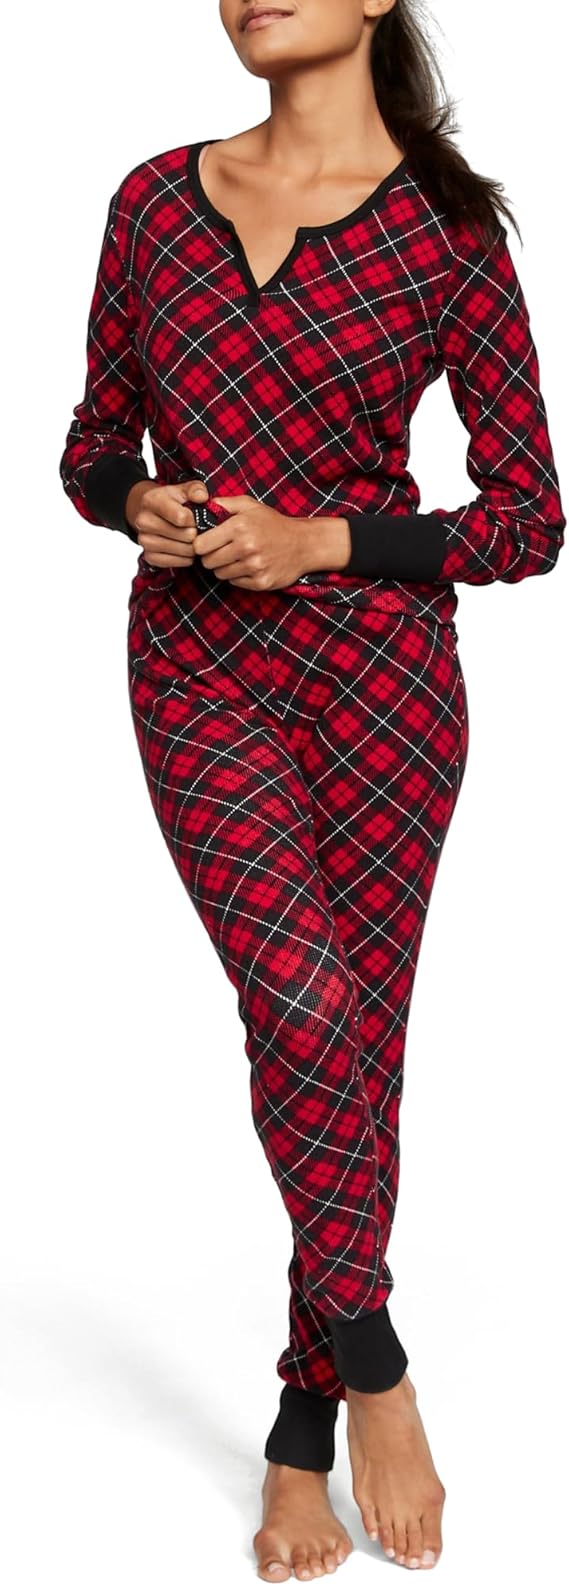 Victoria’s Secret Thermal Long Pajama Set $19.99 at Amazon (reg. $59.95; SAVE 67%)